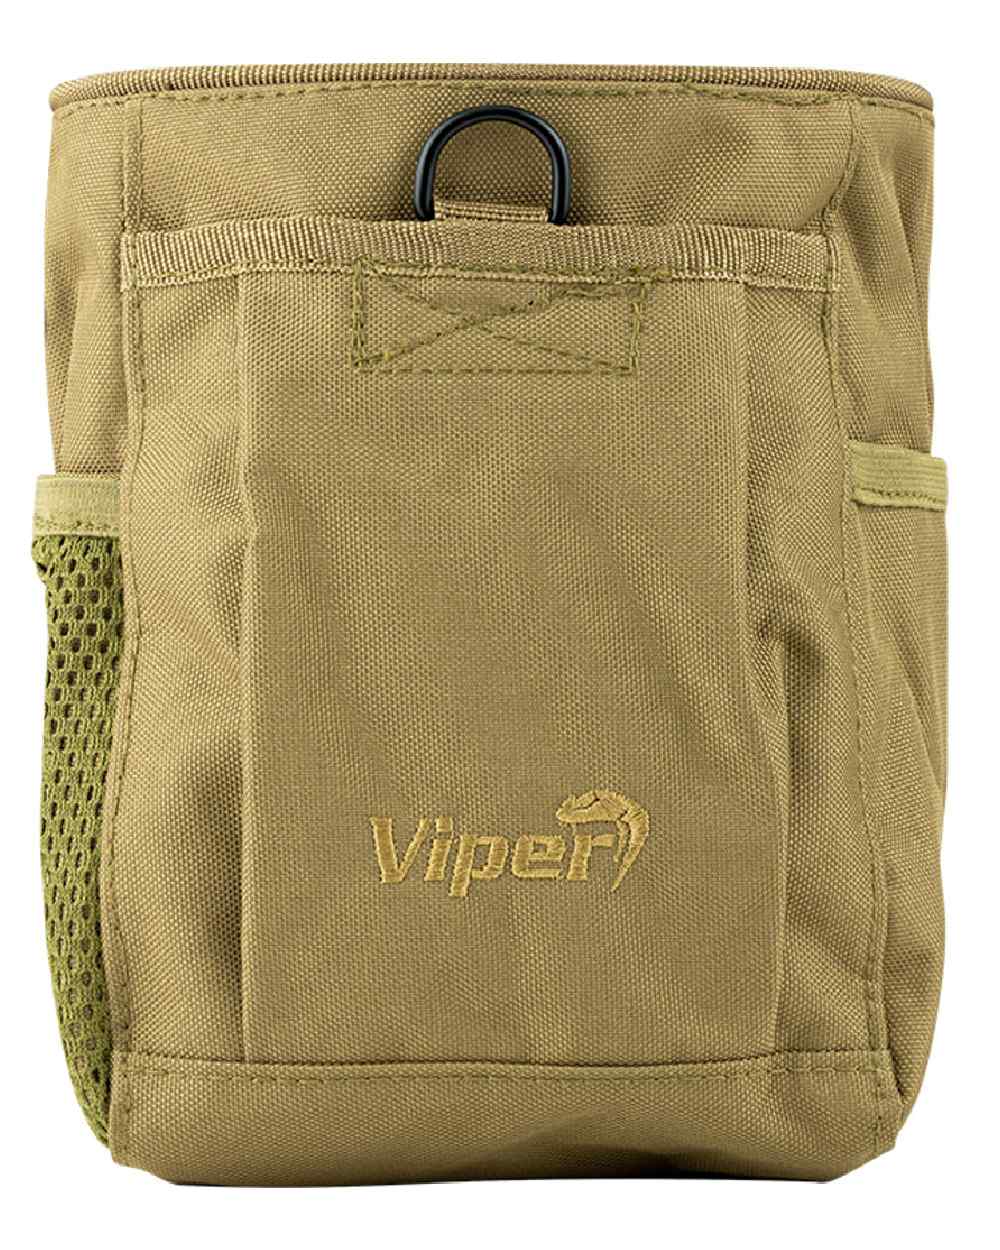 Viper Elite Dump Bag in Coyote 